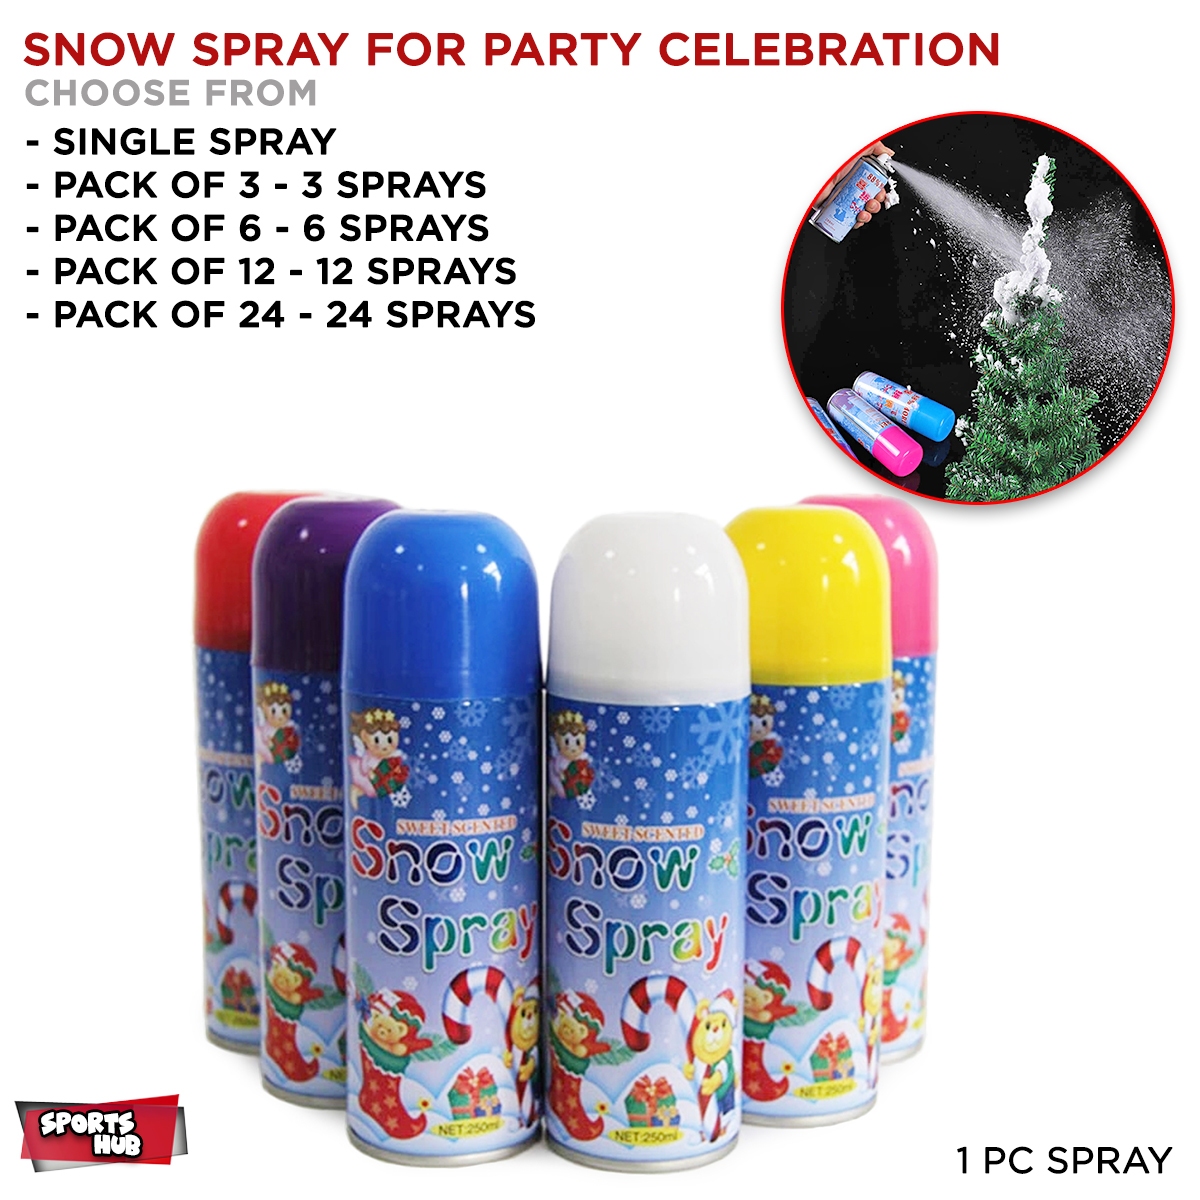 Snow Spray for birthday parties celebration, Artificial Snow spray